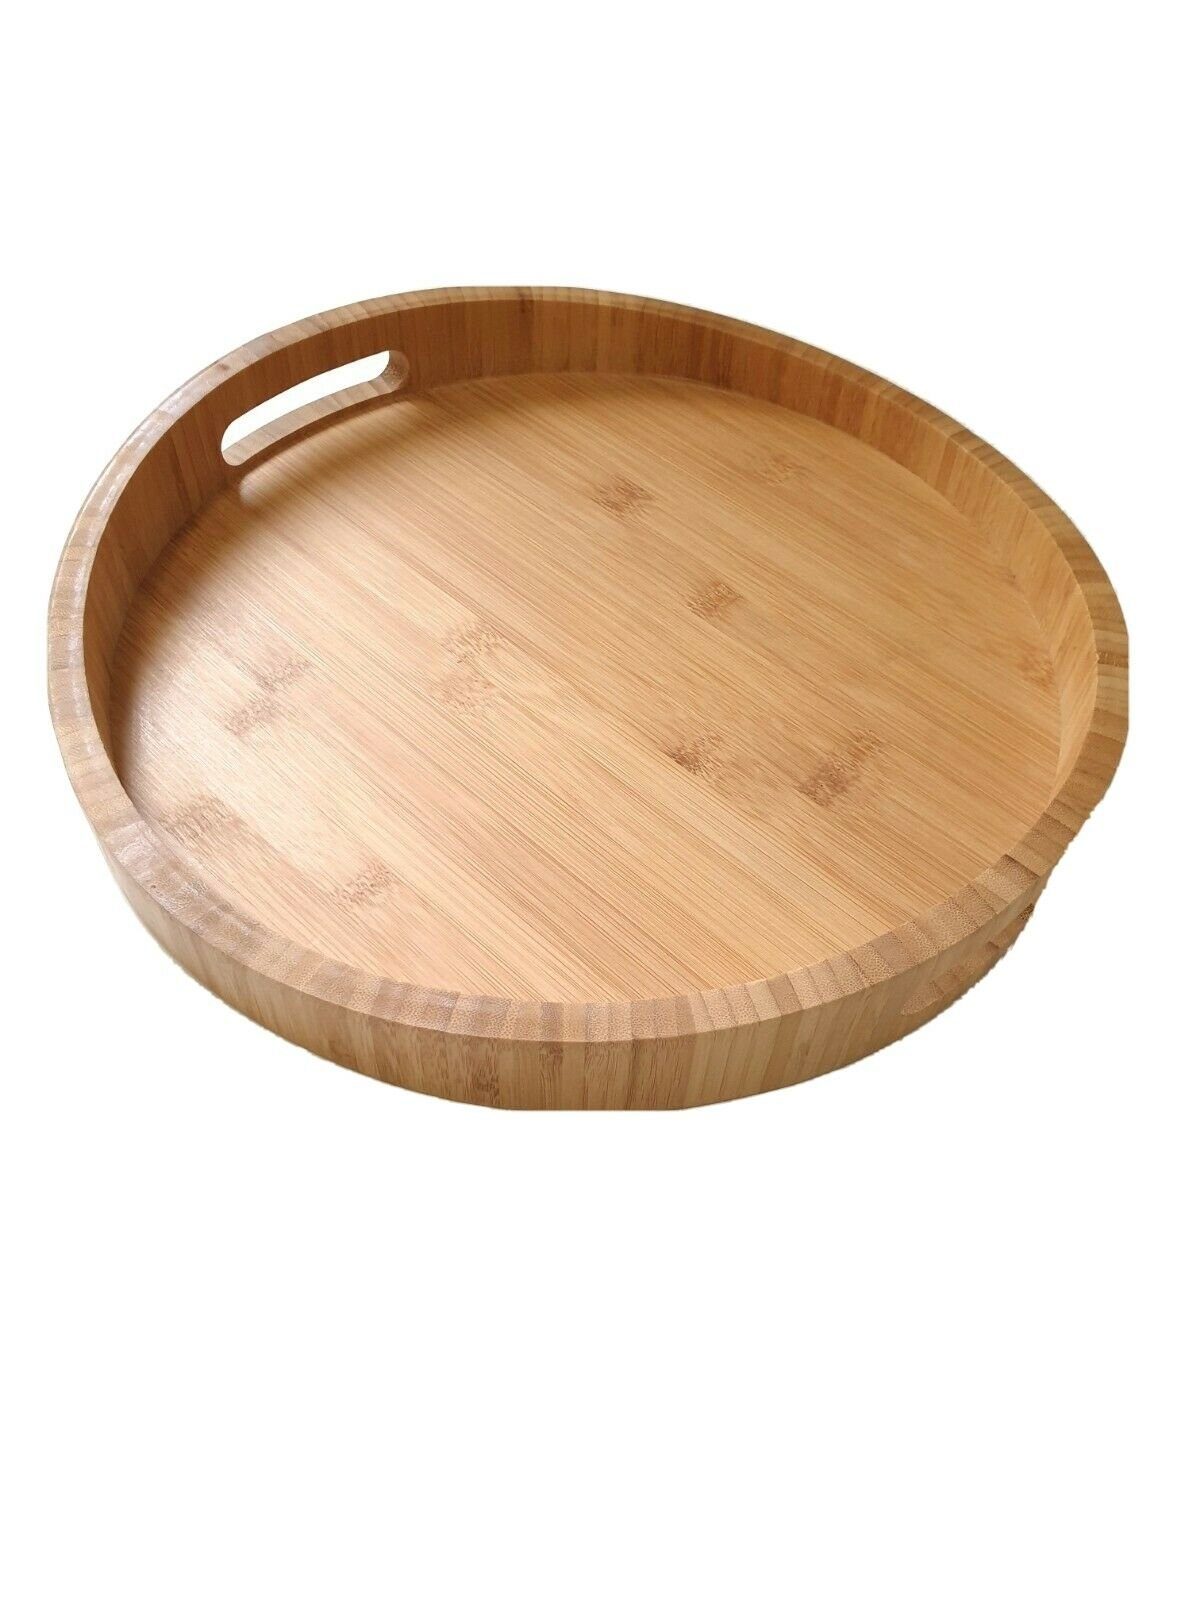 sesua Dekotablett Tablett aus Bambusholz Holztablett Bambustablett cm Durchmesser 35